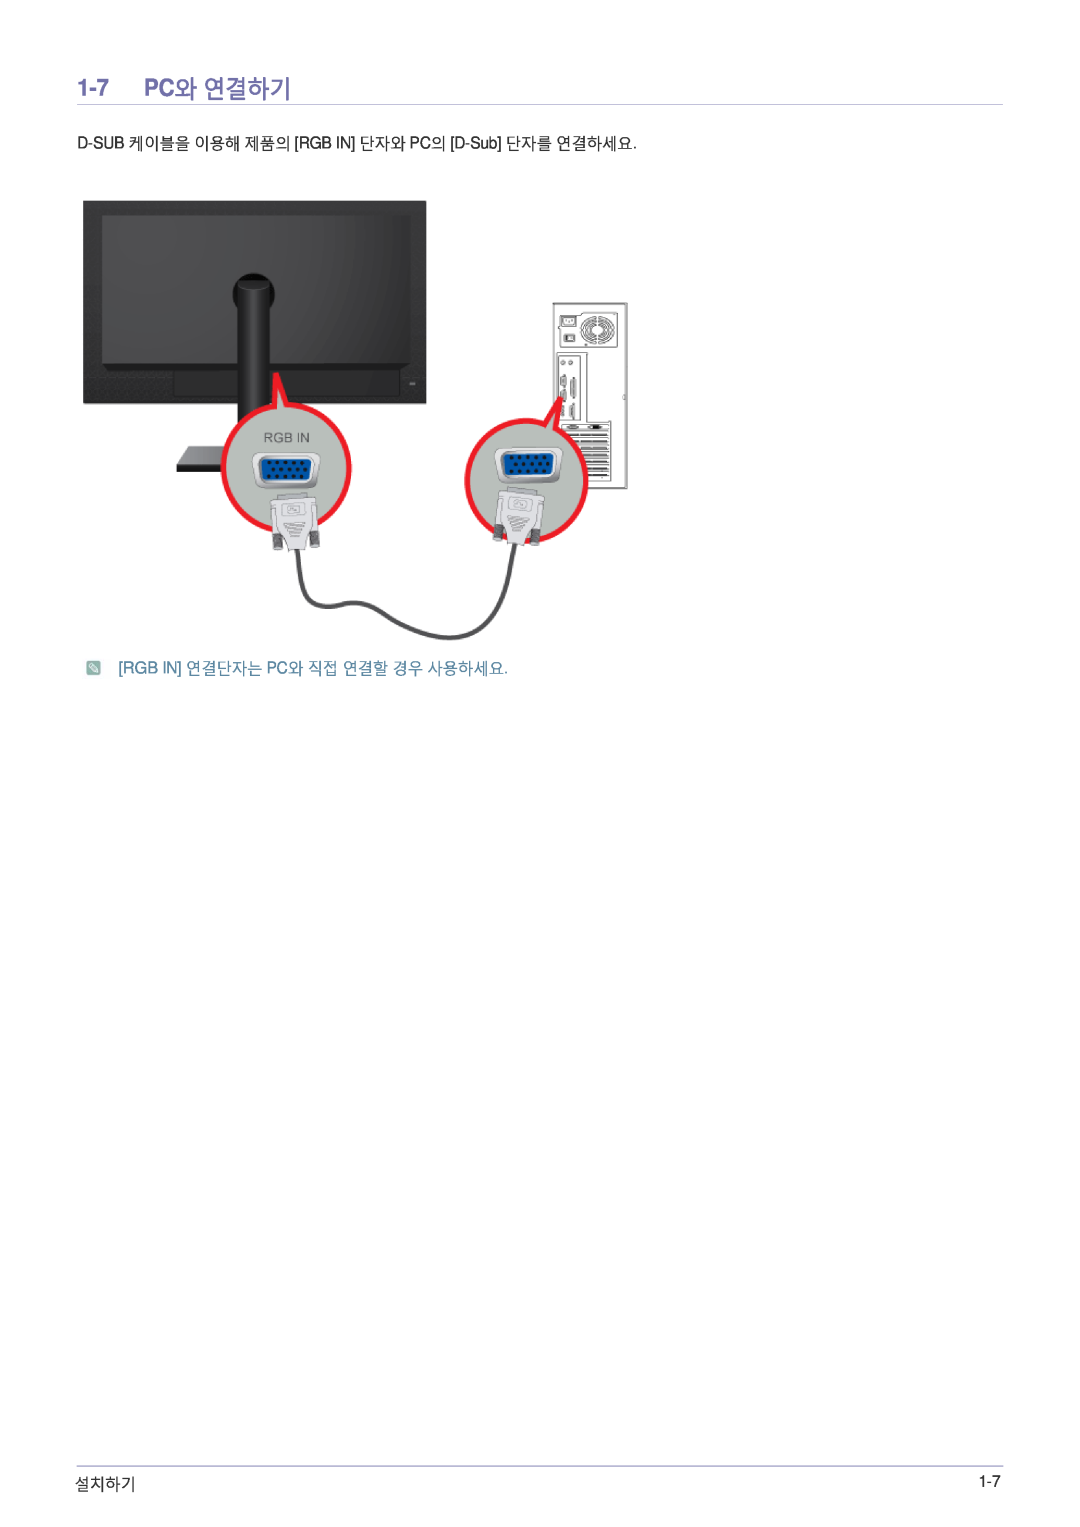 Samsung BN59-00954A_02 1-7 PC와 연결하기, D-SUB 케이블을 이용해 제품의 RGB IN 단자와 PC의 D-Sub 단자를 연결하세요, Rgb In 연결단자는 Pc와 직접 연결할 경우 사용하세요 